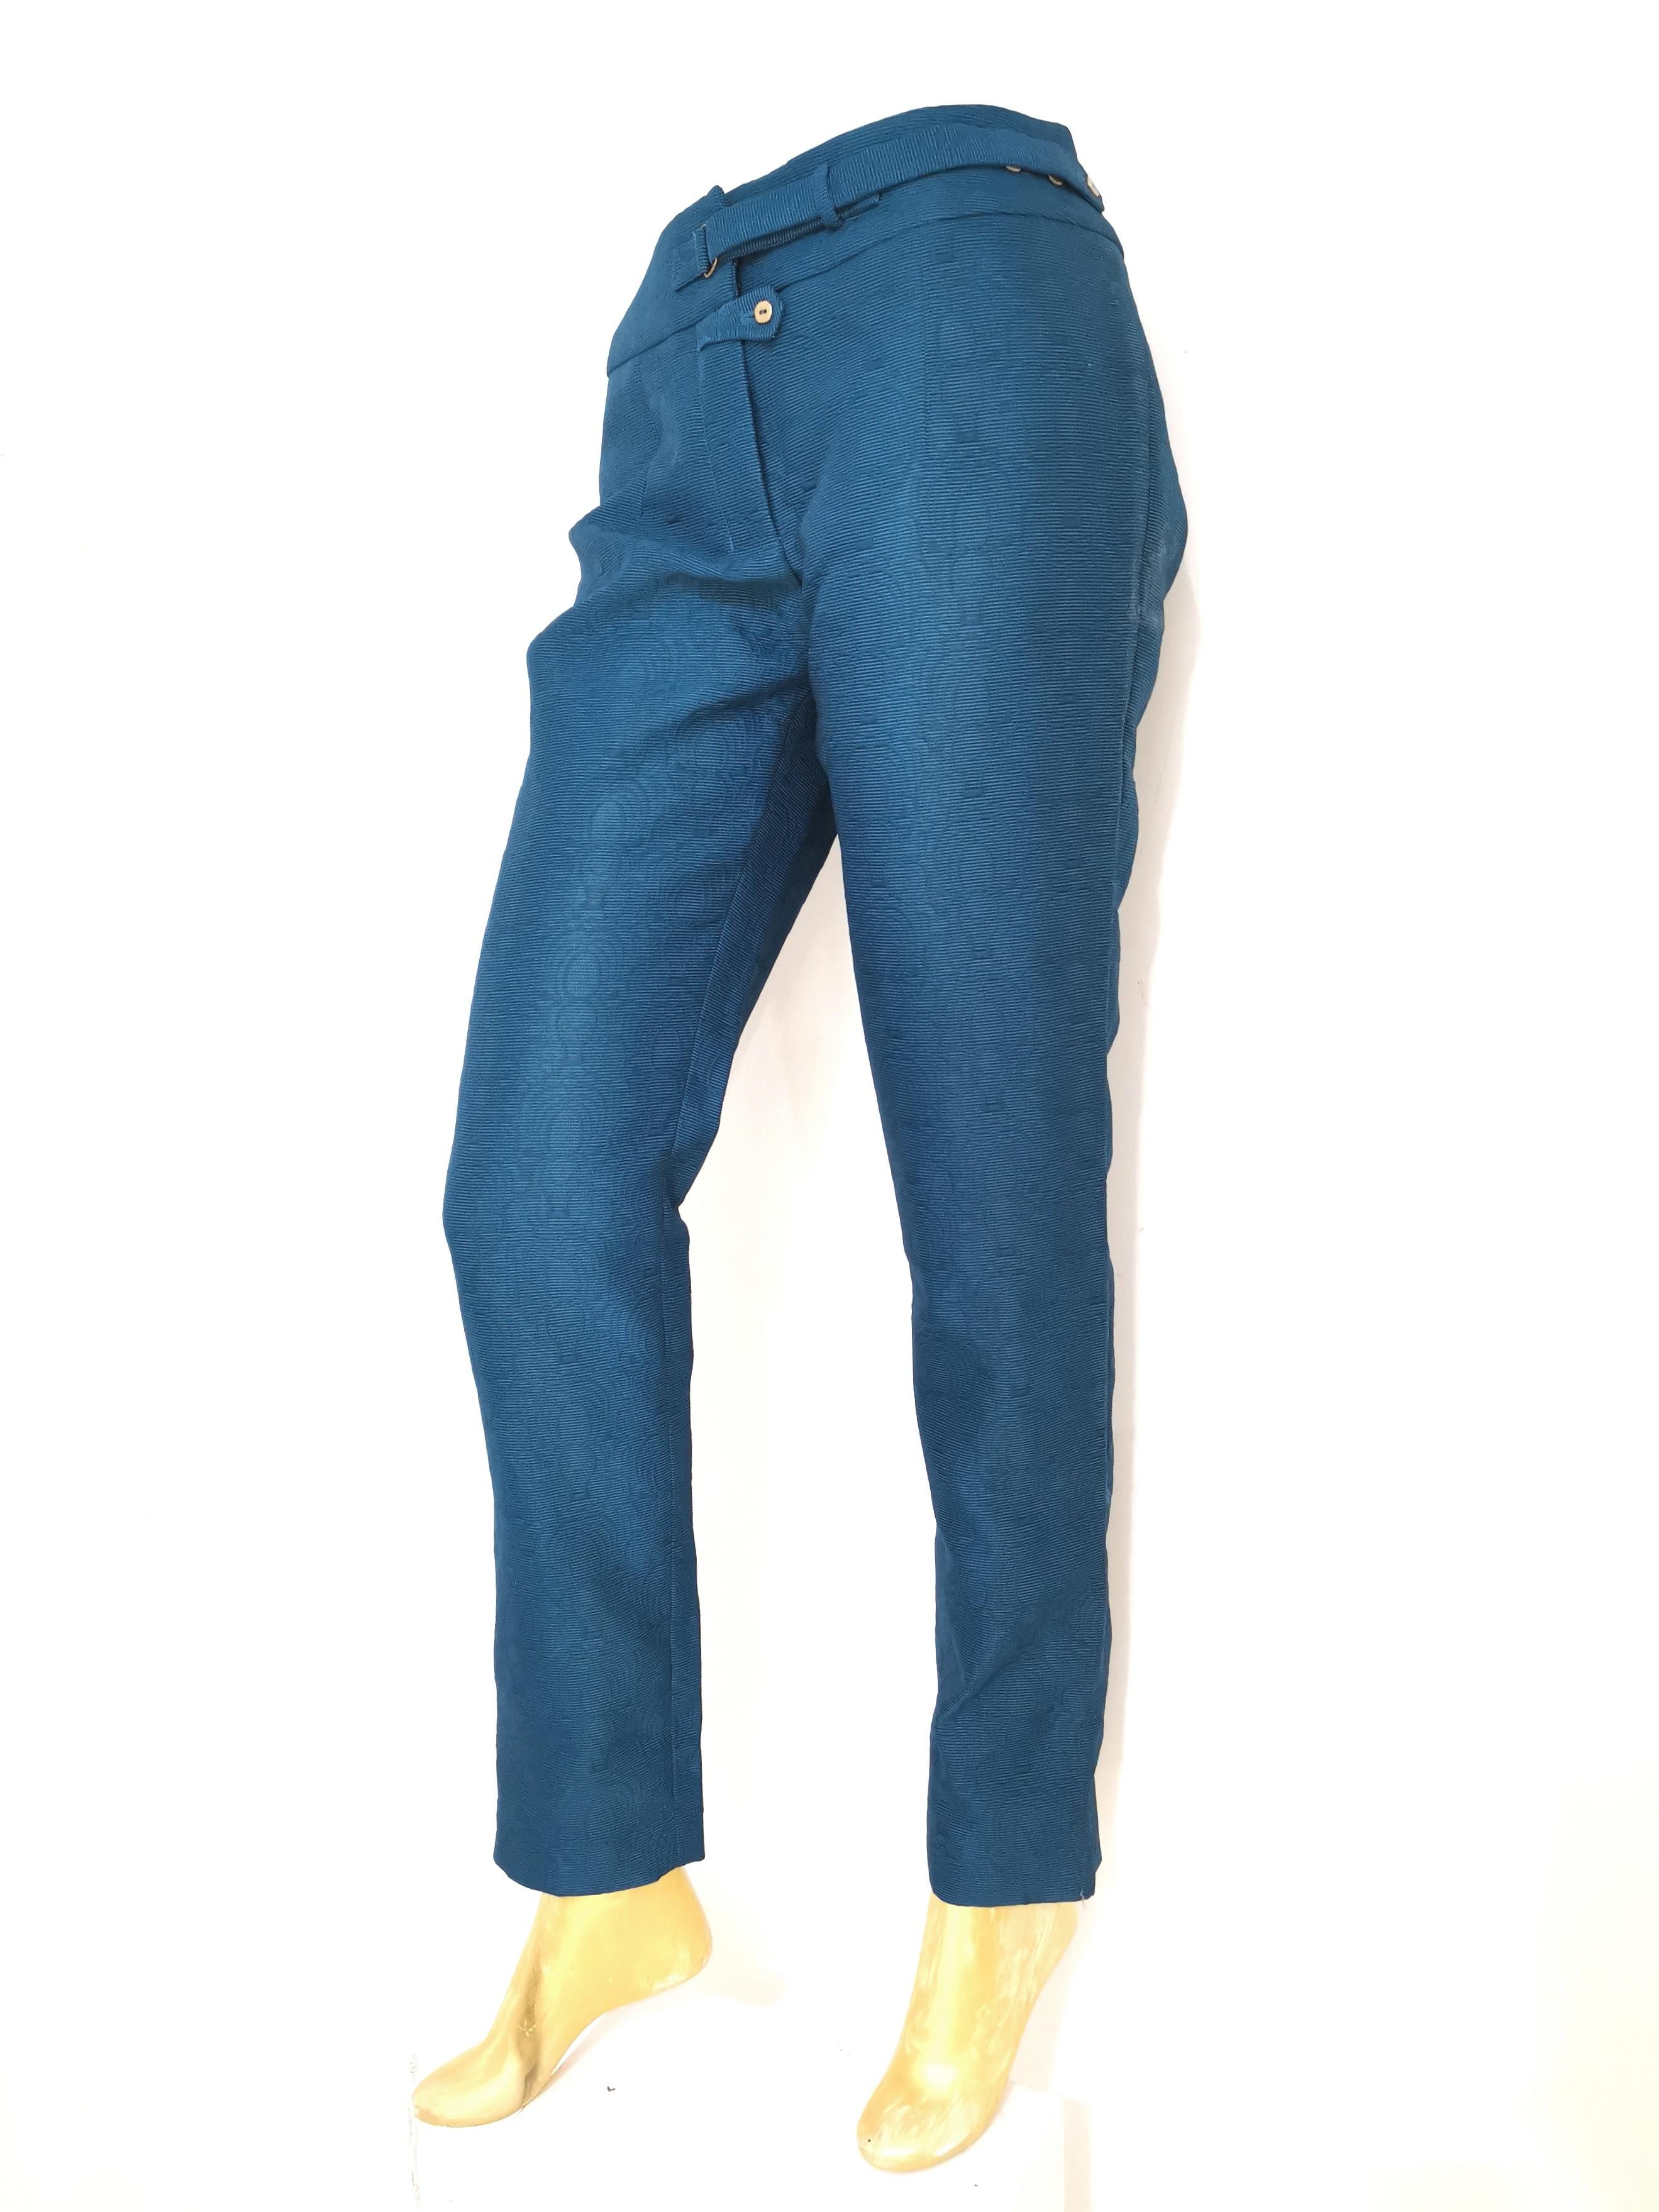 2012 Yves Saint Laurent blu pants NWOT For Sale 7